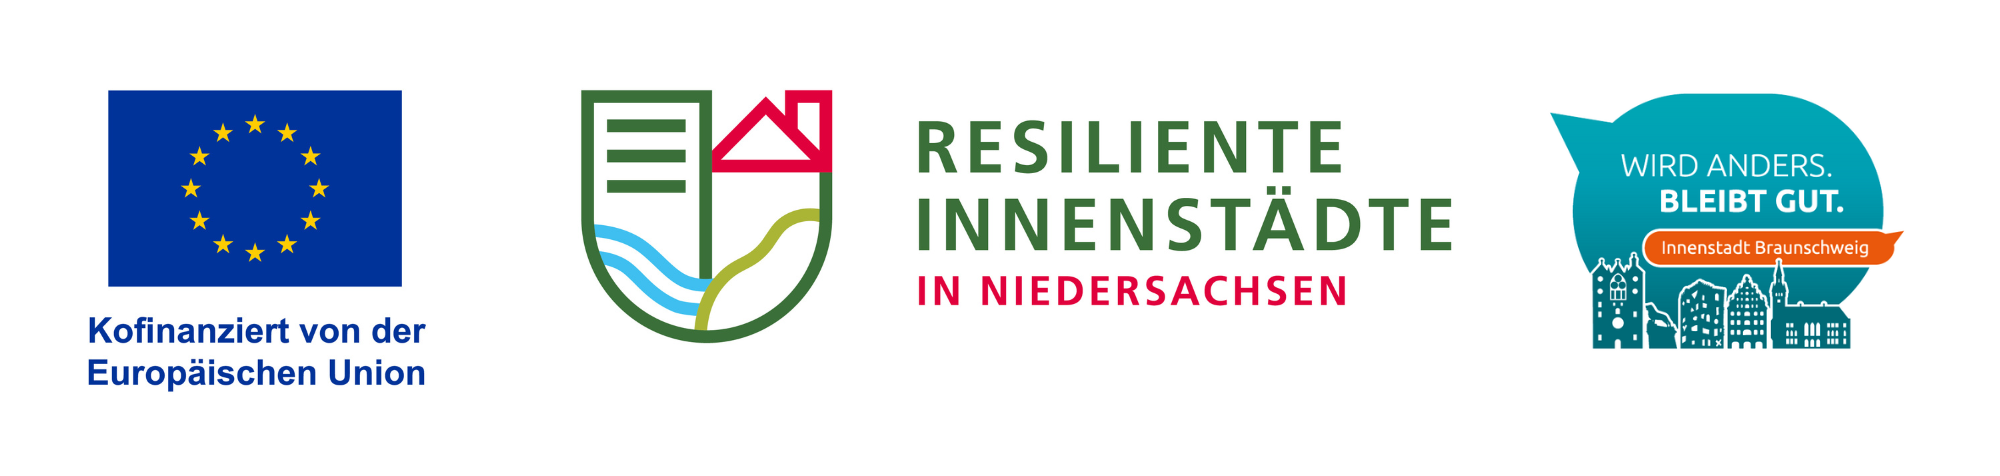 Header mit Logos zum Förderprogramm Resiliente Innenstadt